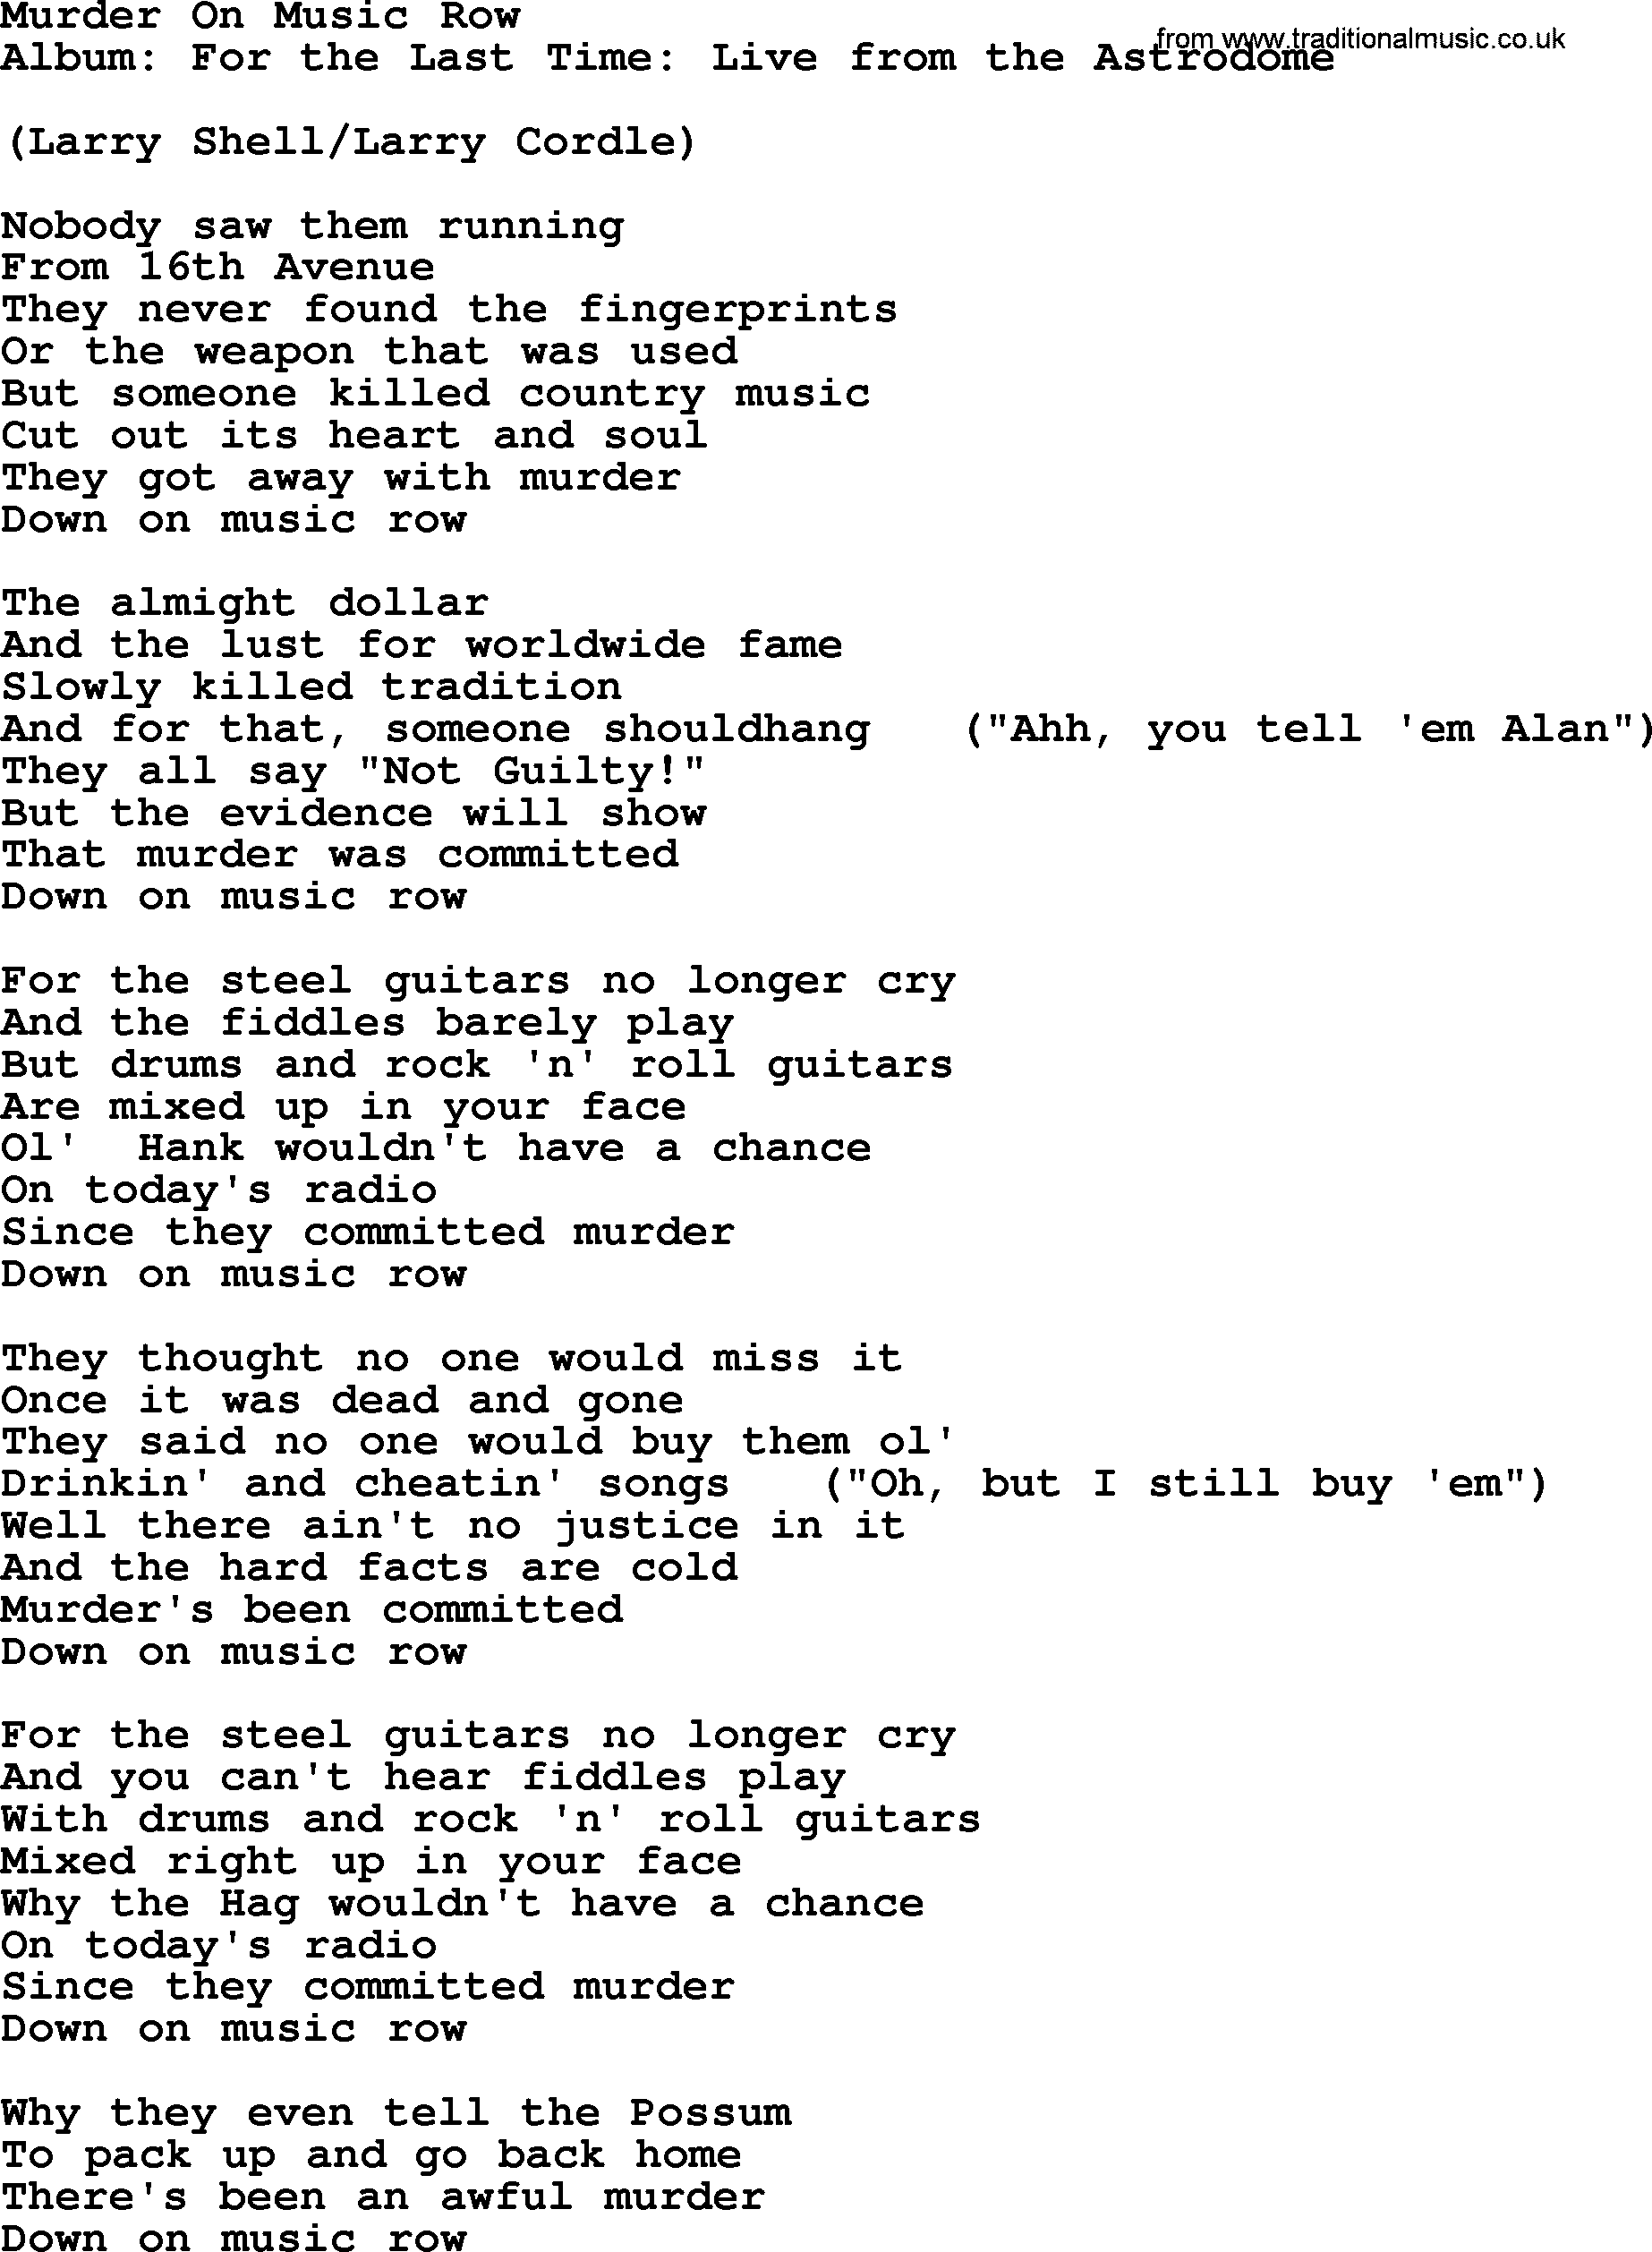 George Strait song: Murder On Music Row, lyrics